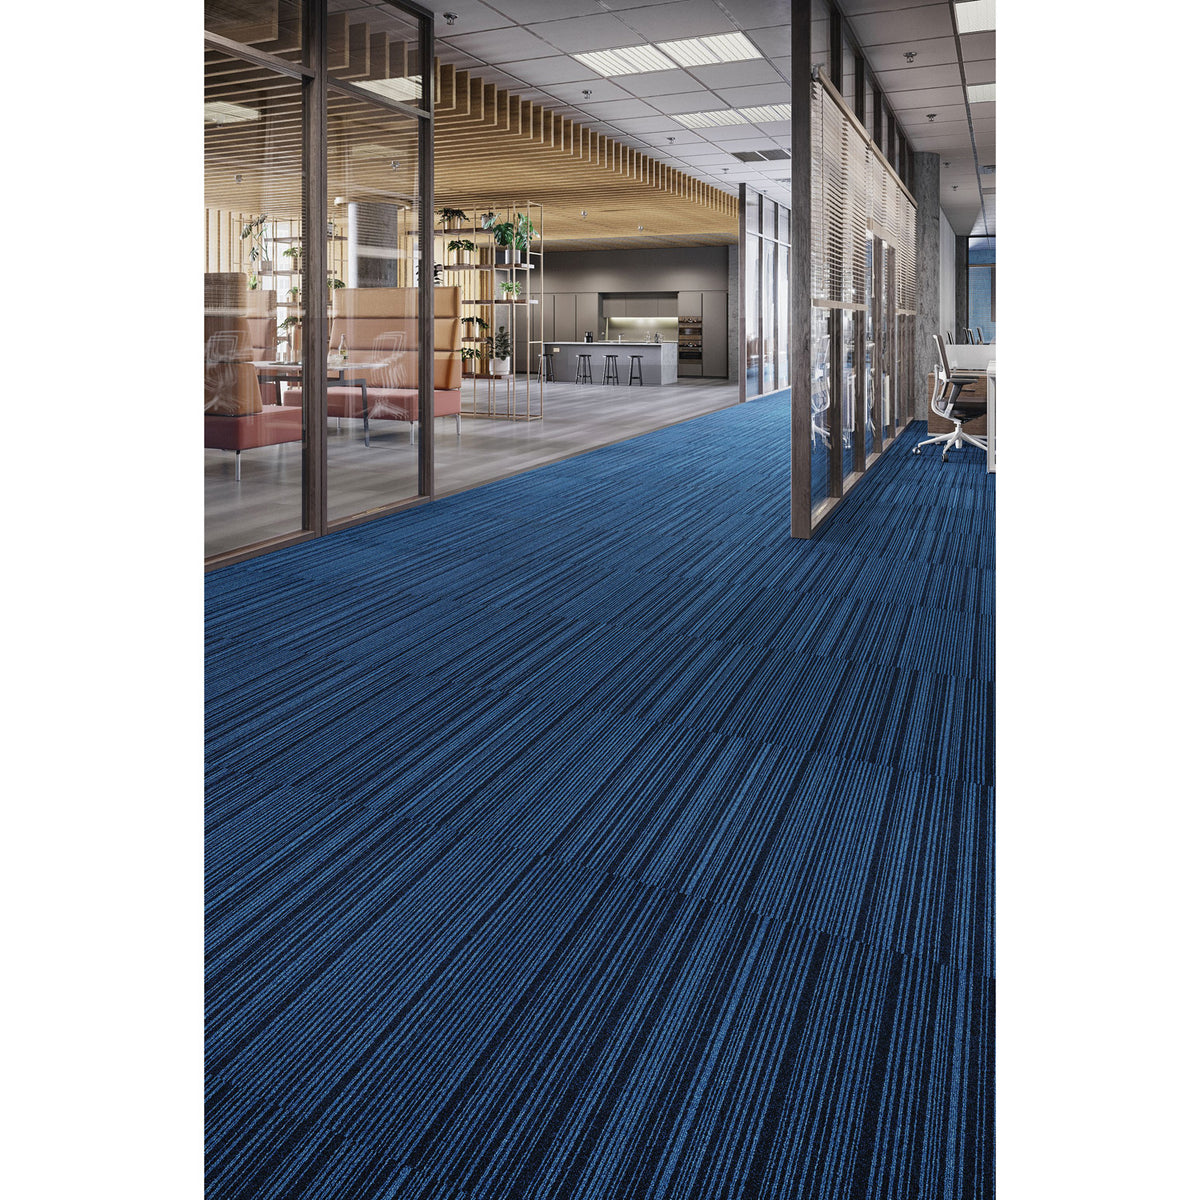 Mohawk Group - Art Intervention Draft Point Commercial Carpet Tile - Loden 676